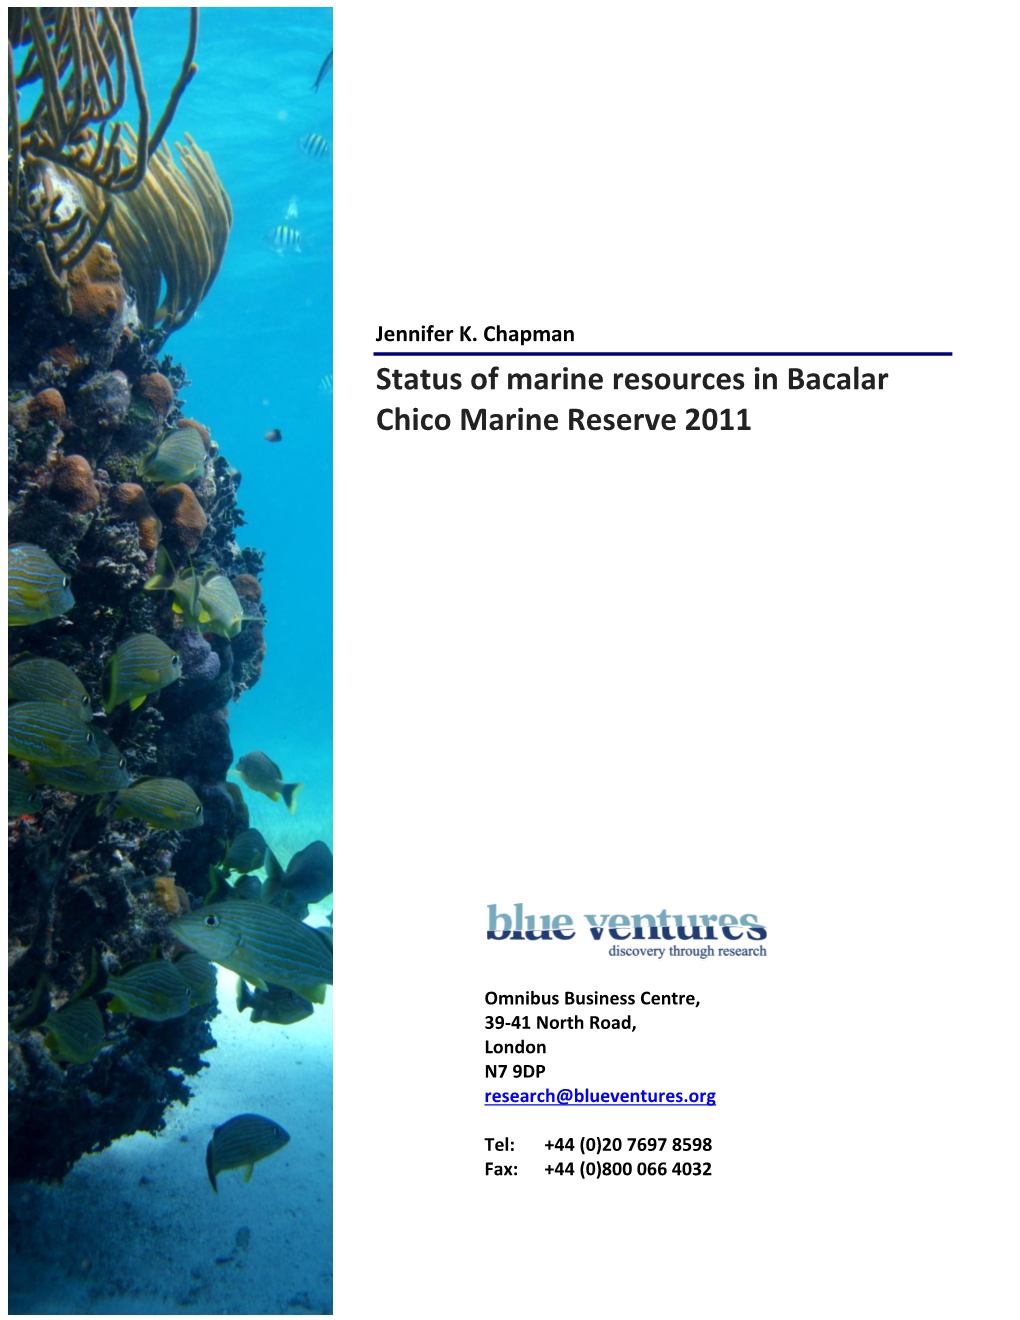 Status of Marine Resources in Bacalar Chico Marine Reserve 2011